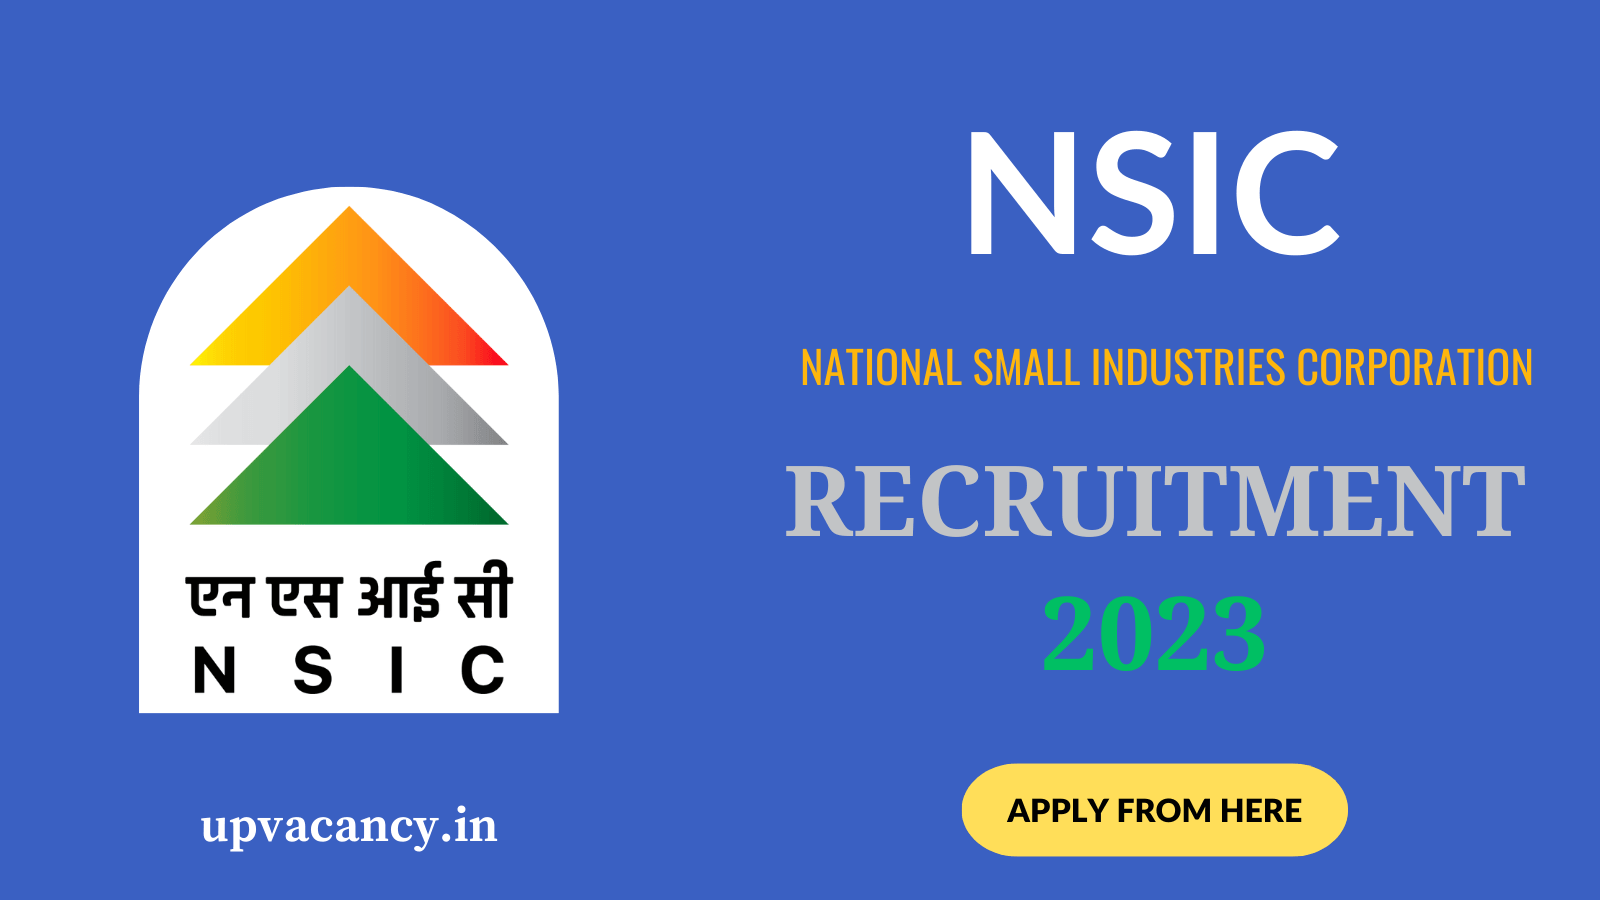 NSIC Recruitment 2023